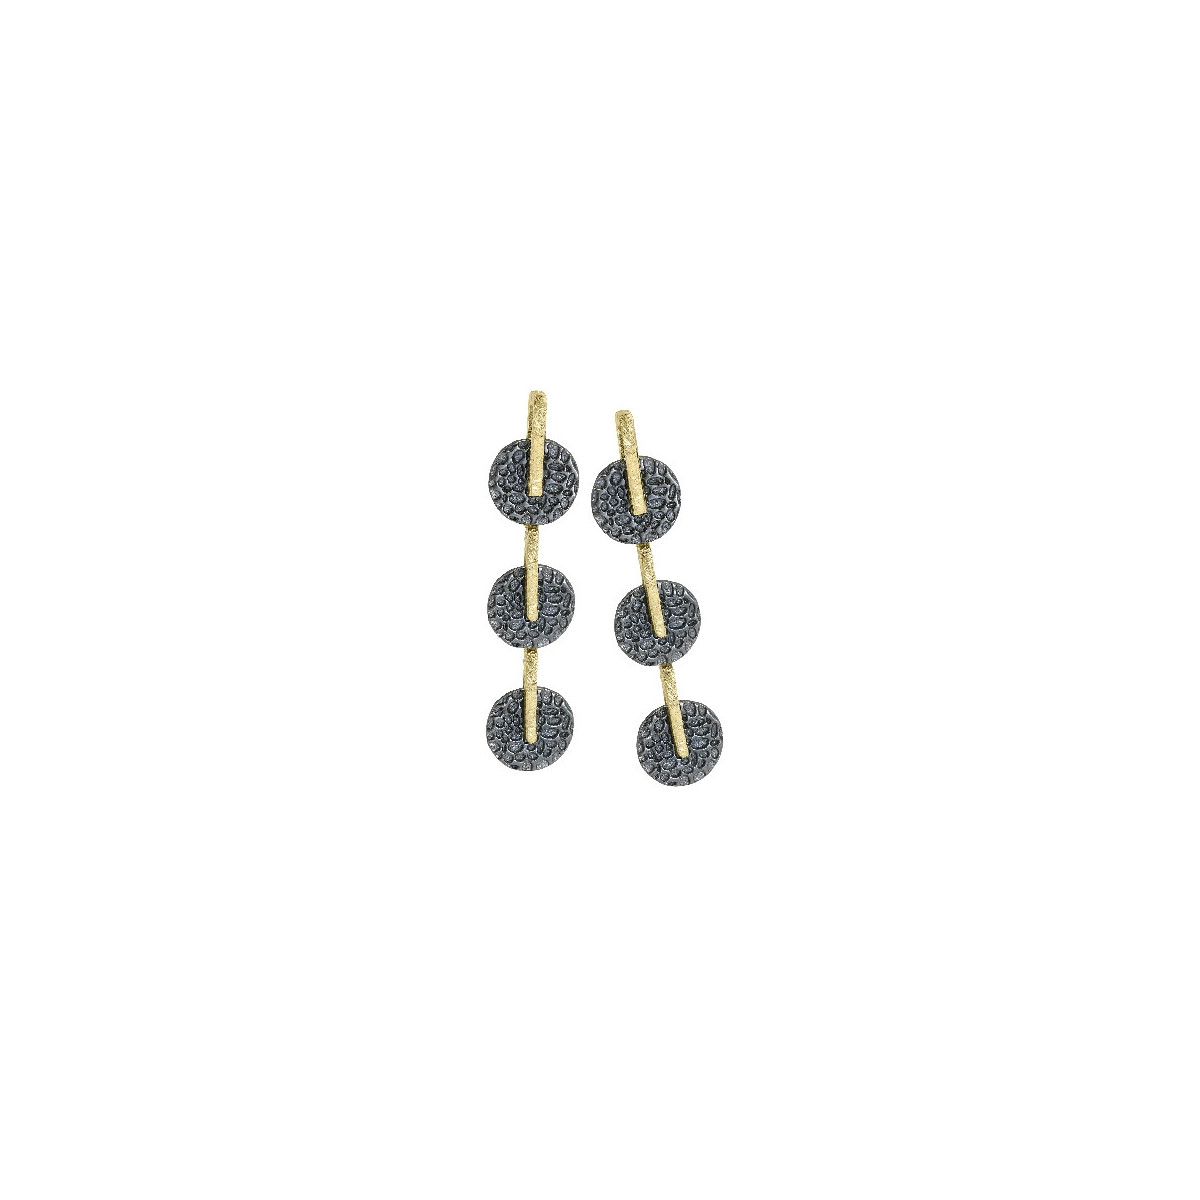 KYMBAL Earrings in Silver. Black Ruthenium and 18k Gold Vermeil